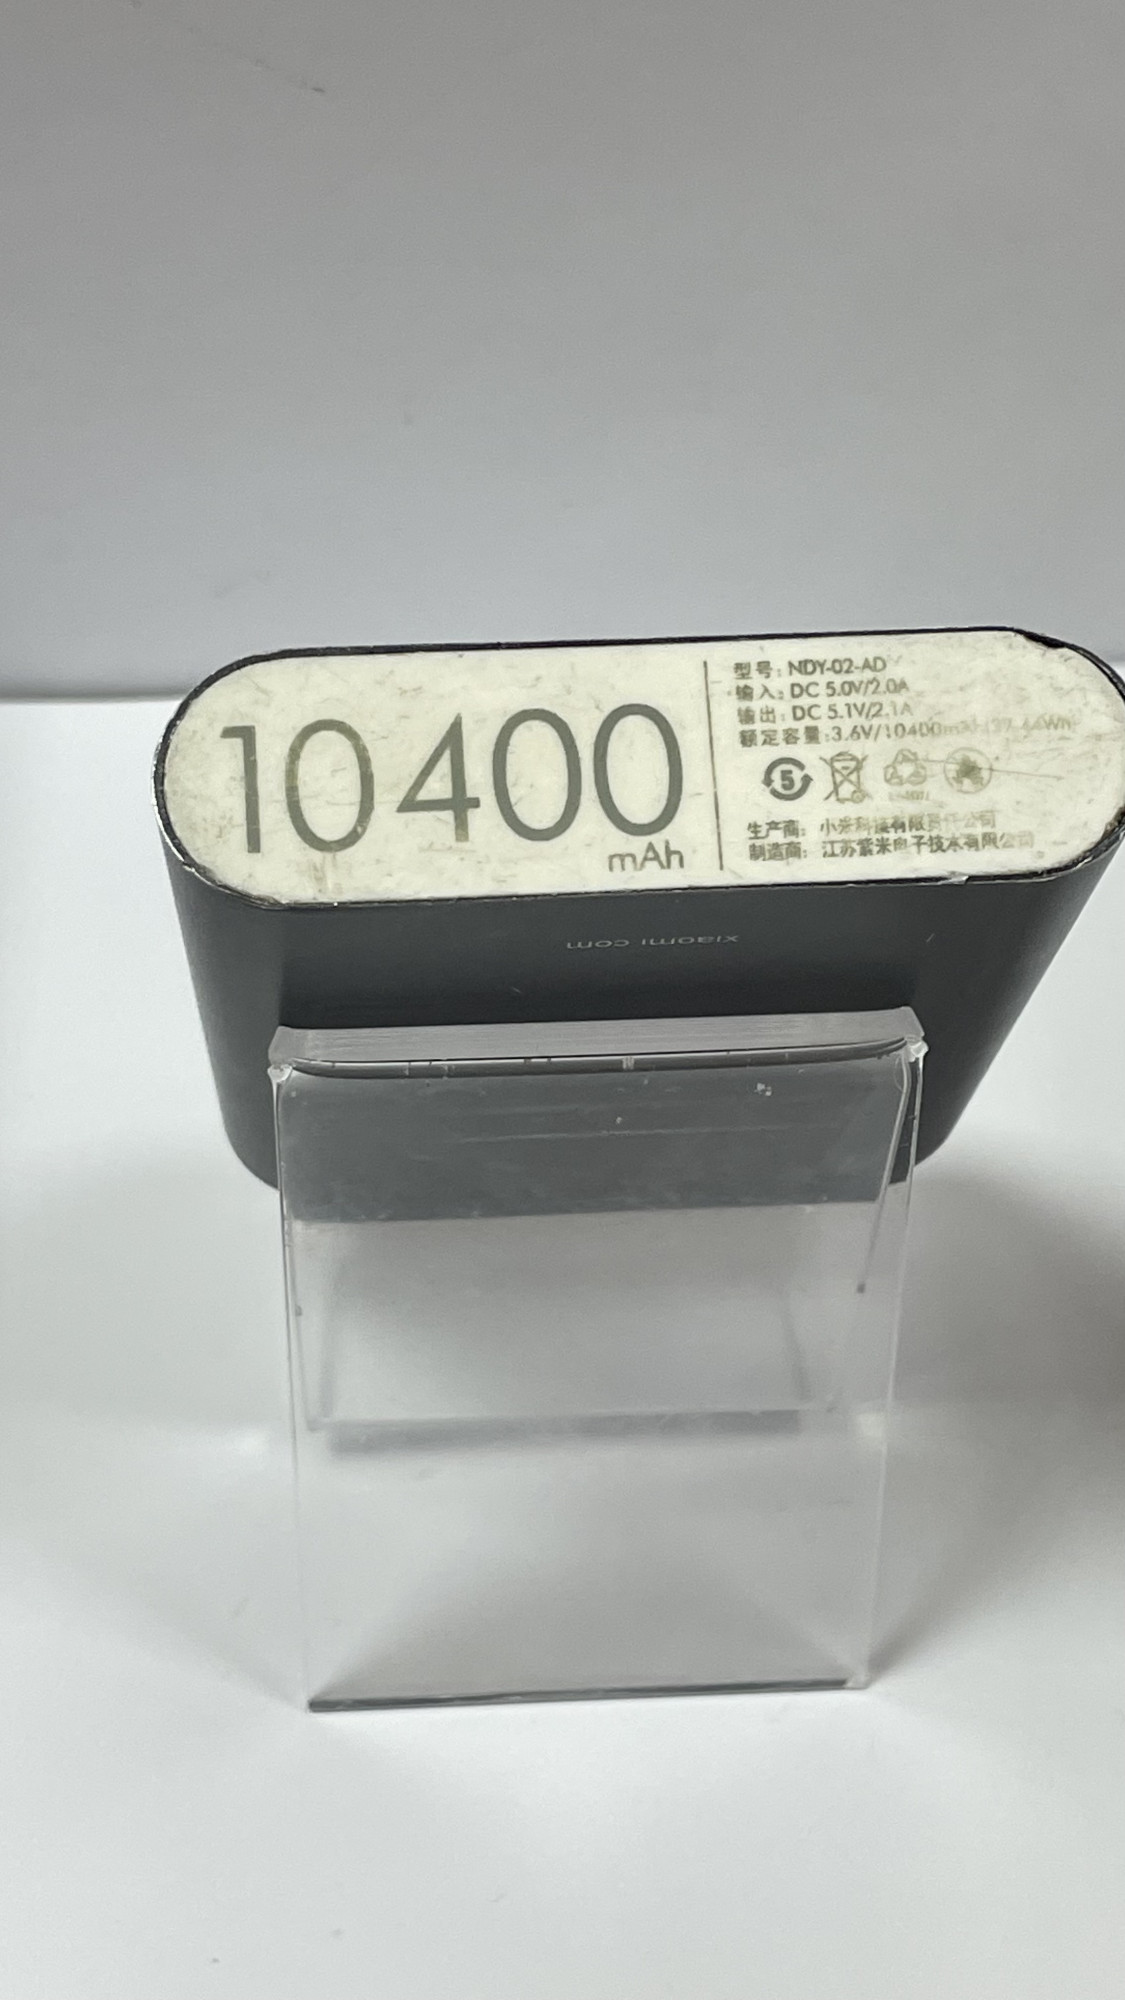 Powerbank Xiaomi 10400 mAh 3